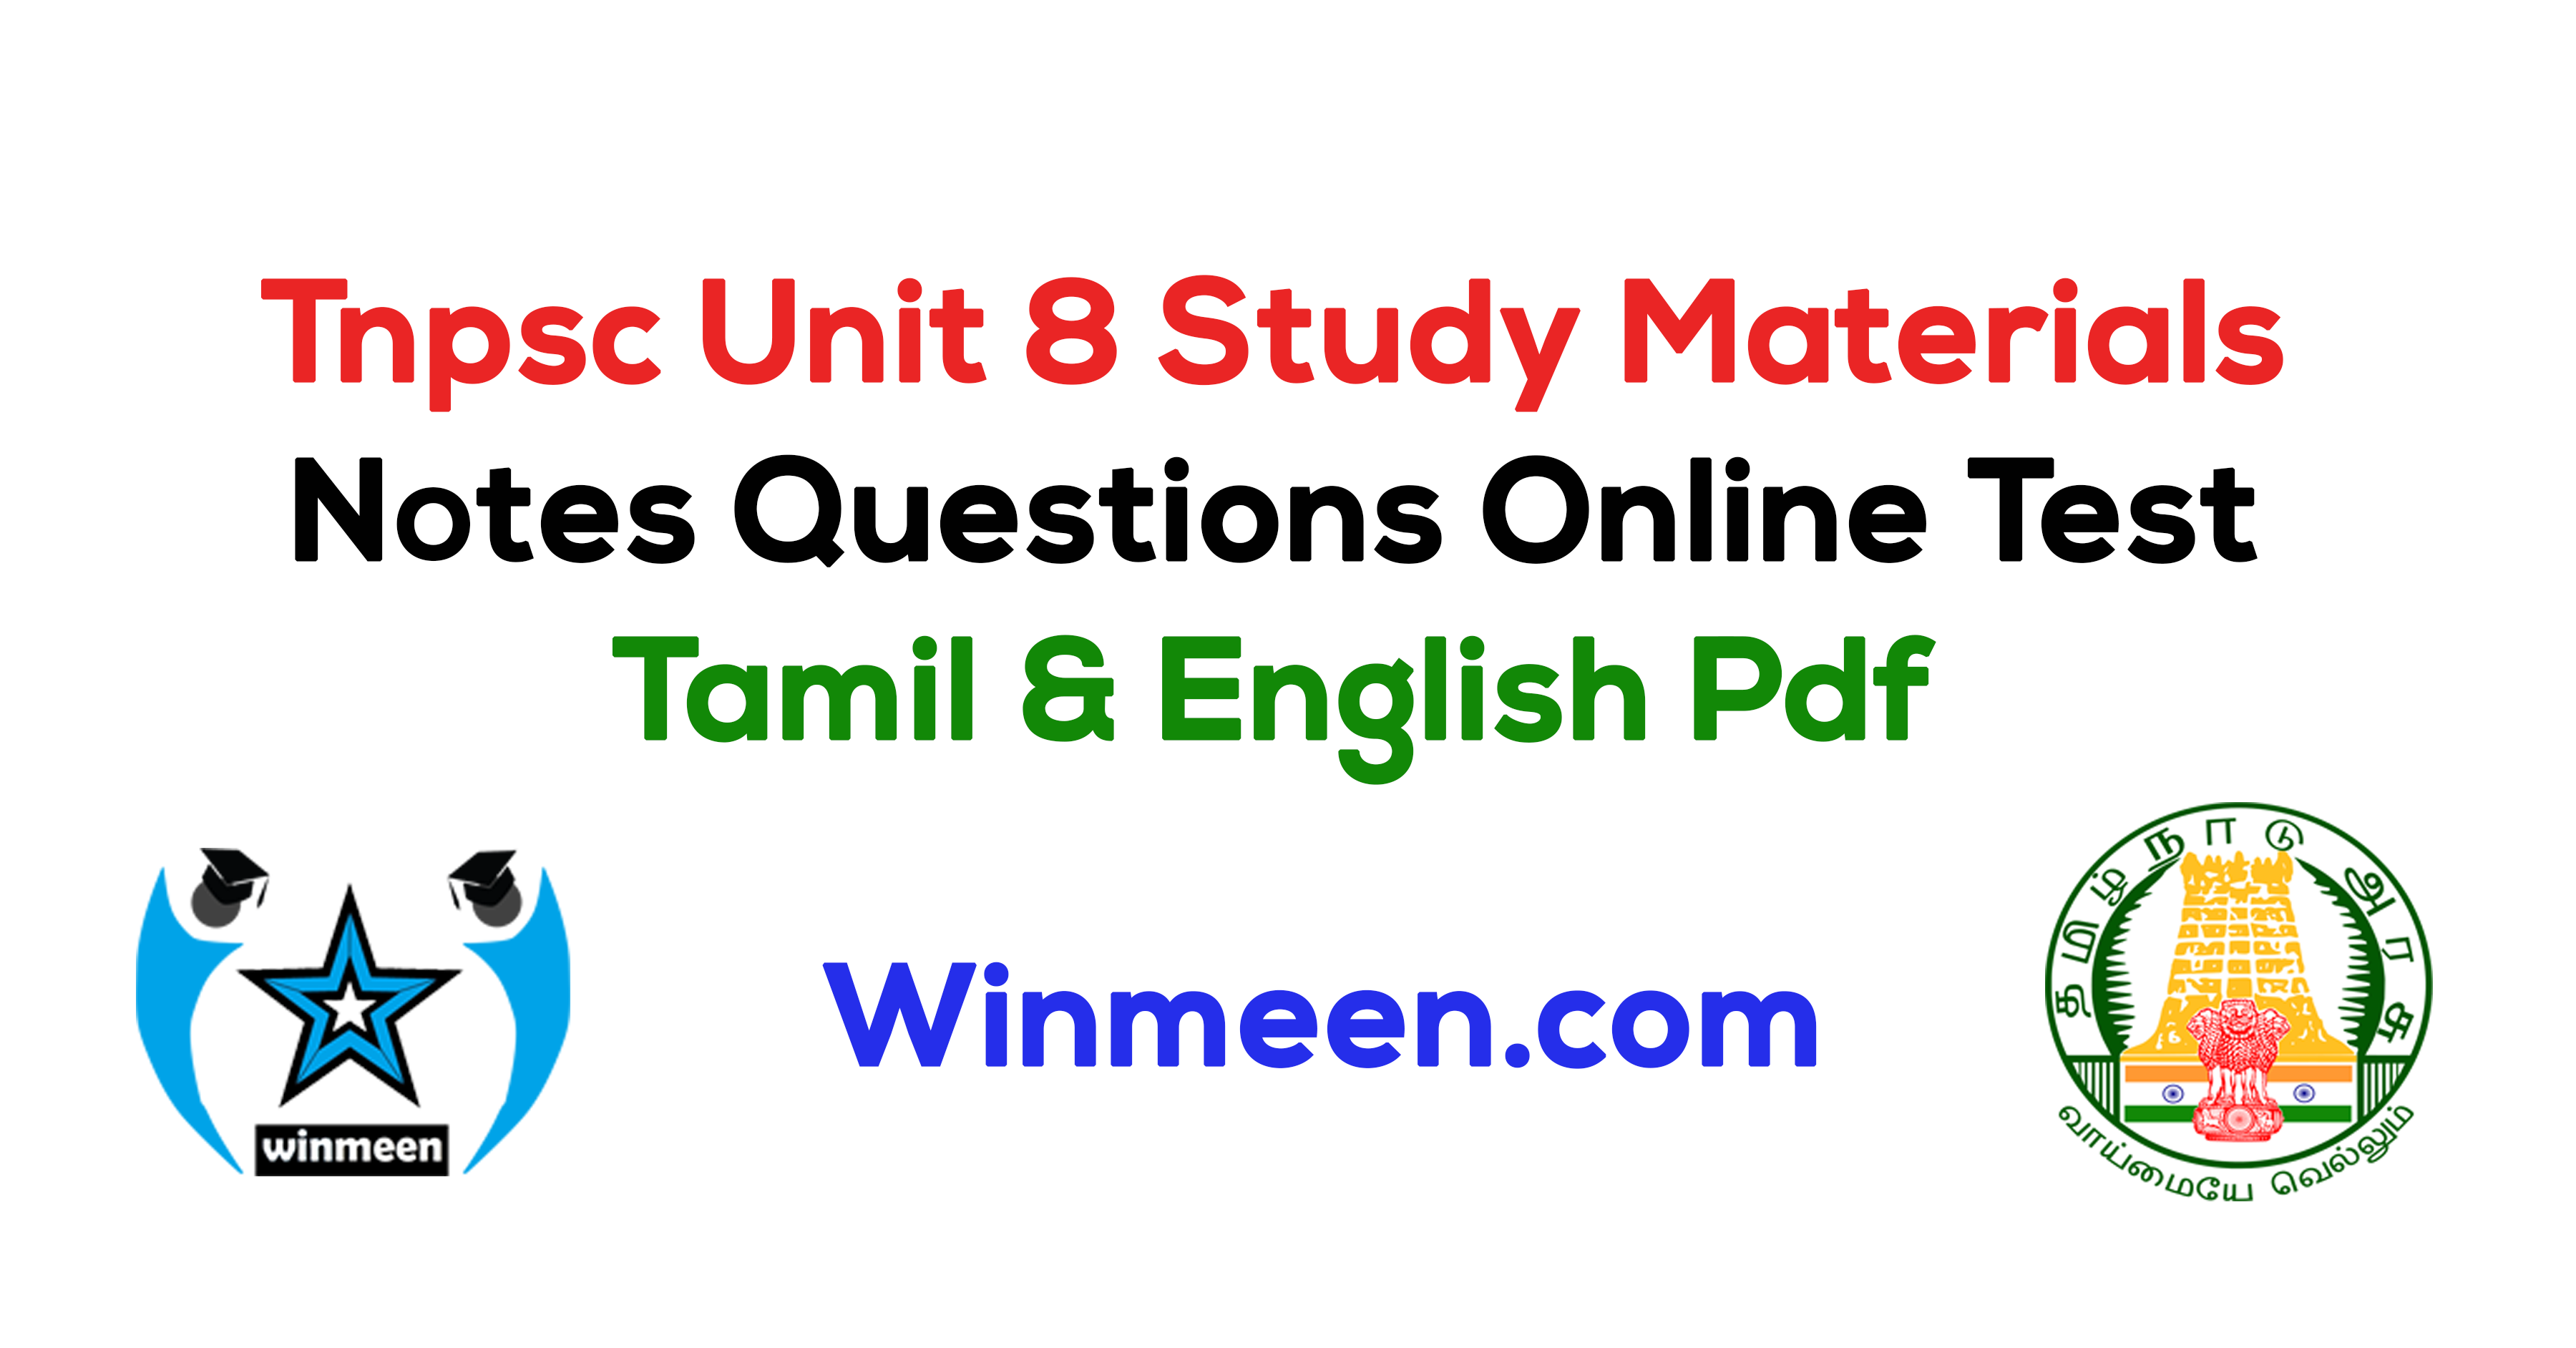 tnpsc-unit-8-study-materials-notes-questions-online-test-tamil-english-pdf-winmeen